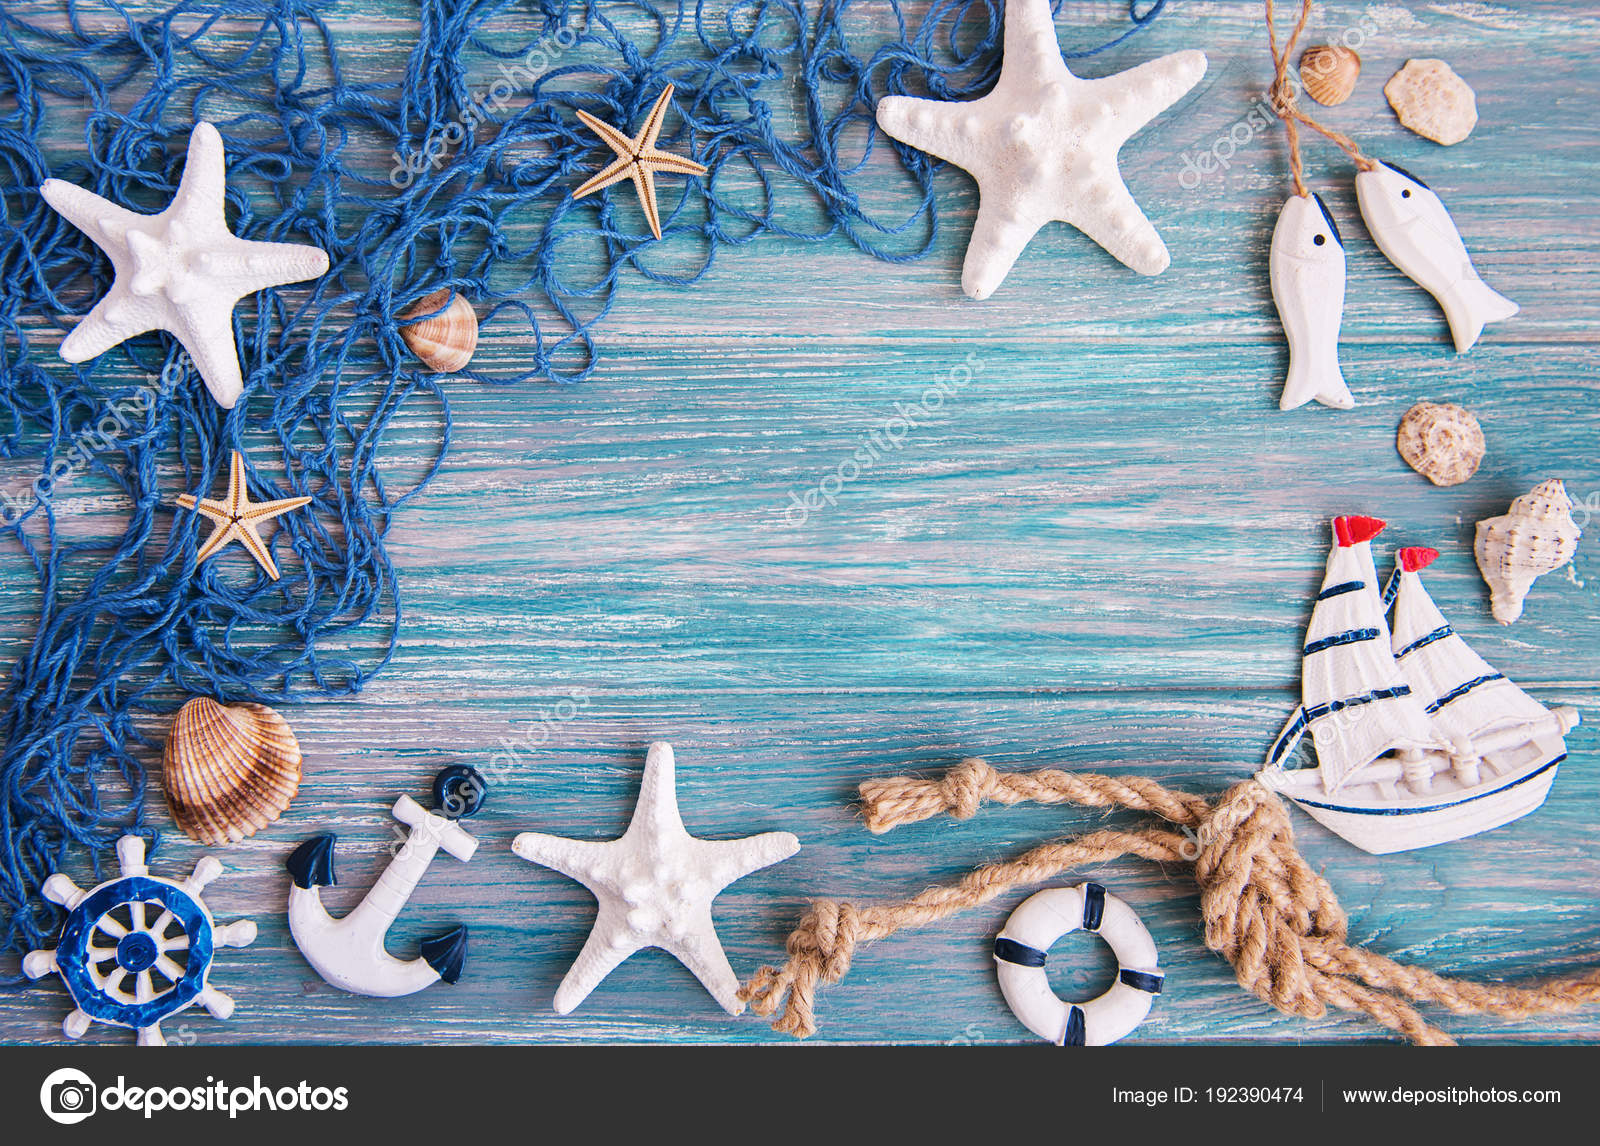 https://st3.depositphotos.com/4328893/19239/i/1600/depositphotos_192390474-stock-photo-fishing-net-with-starfish-and.jpg